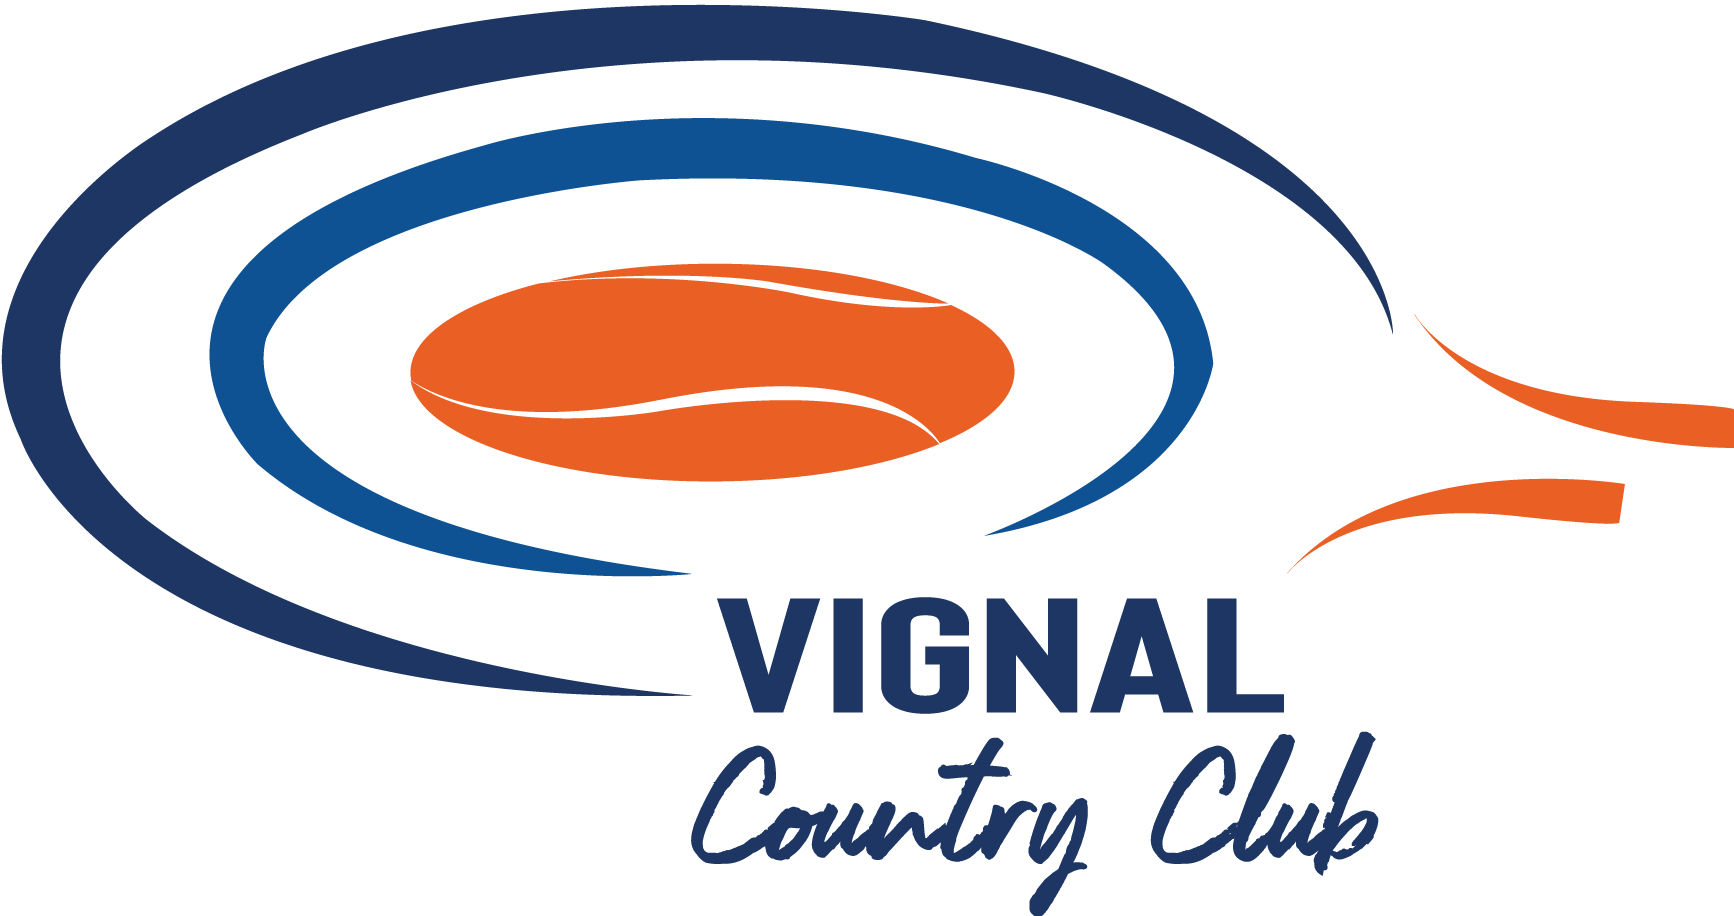 Vignal Country Club